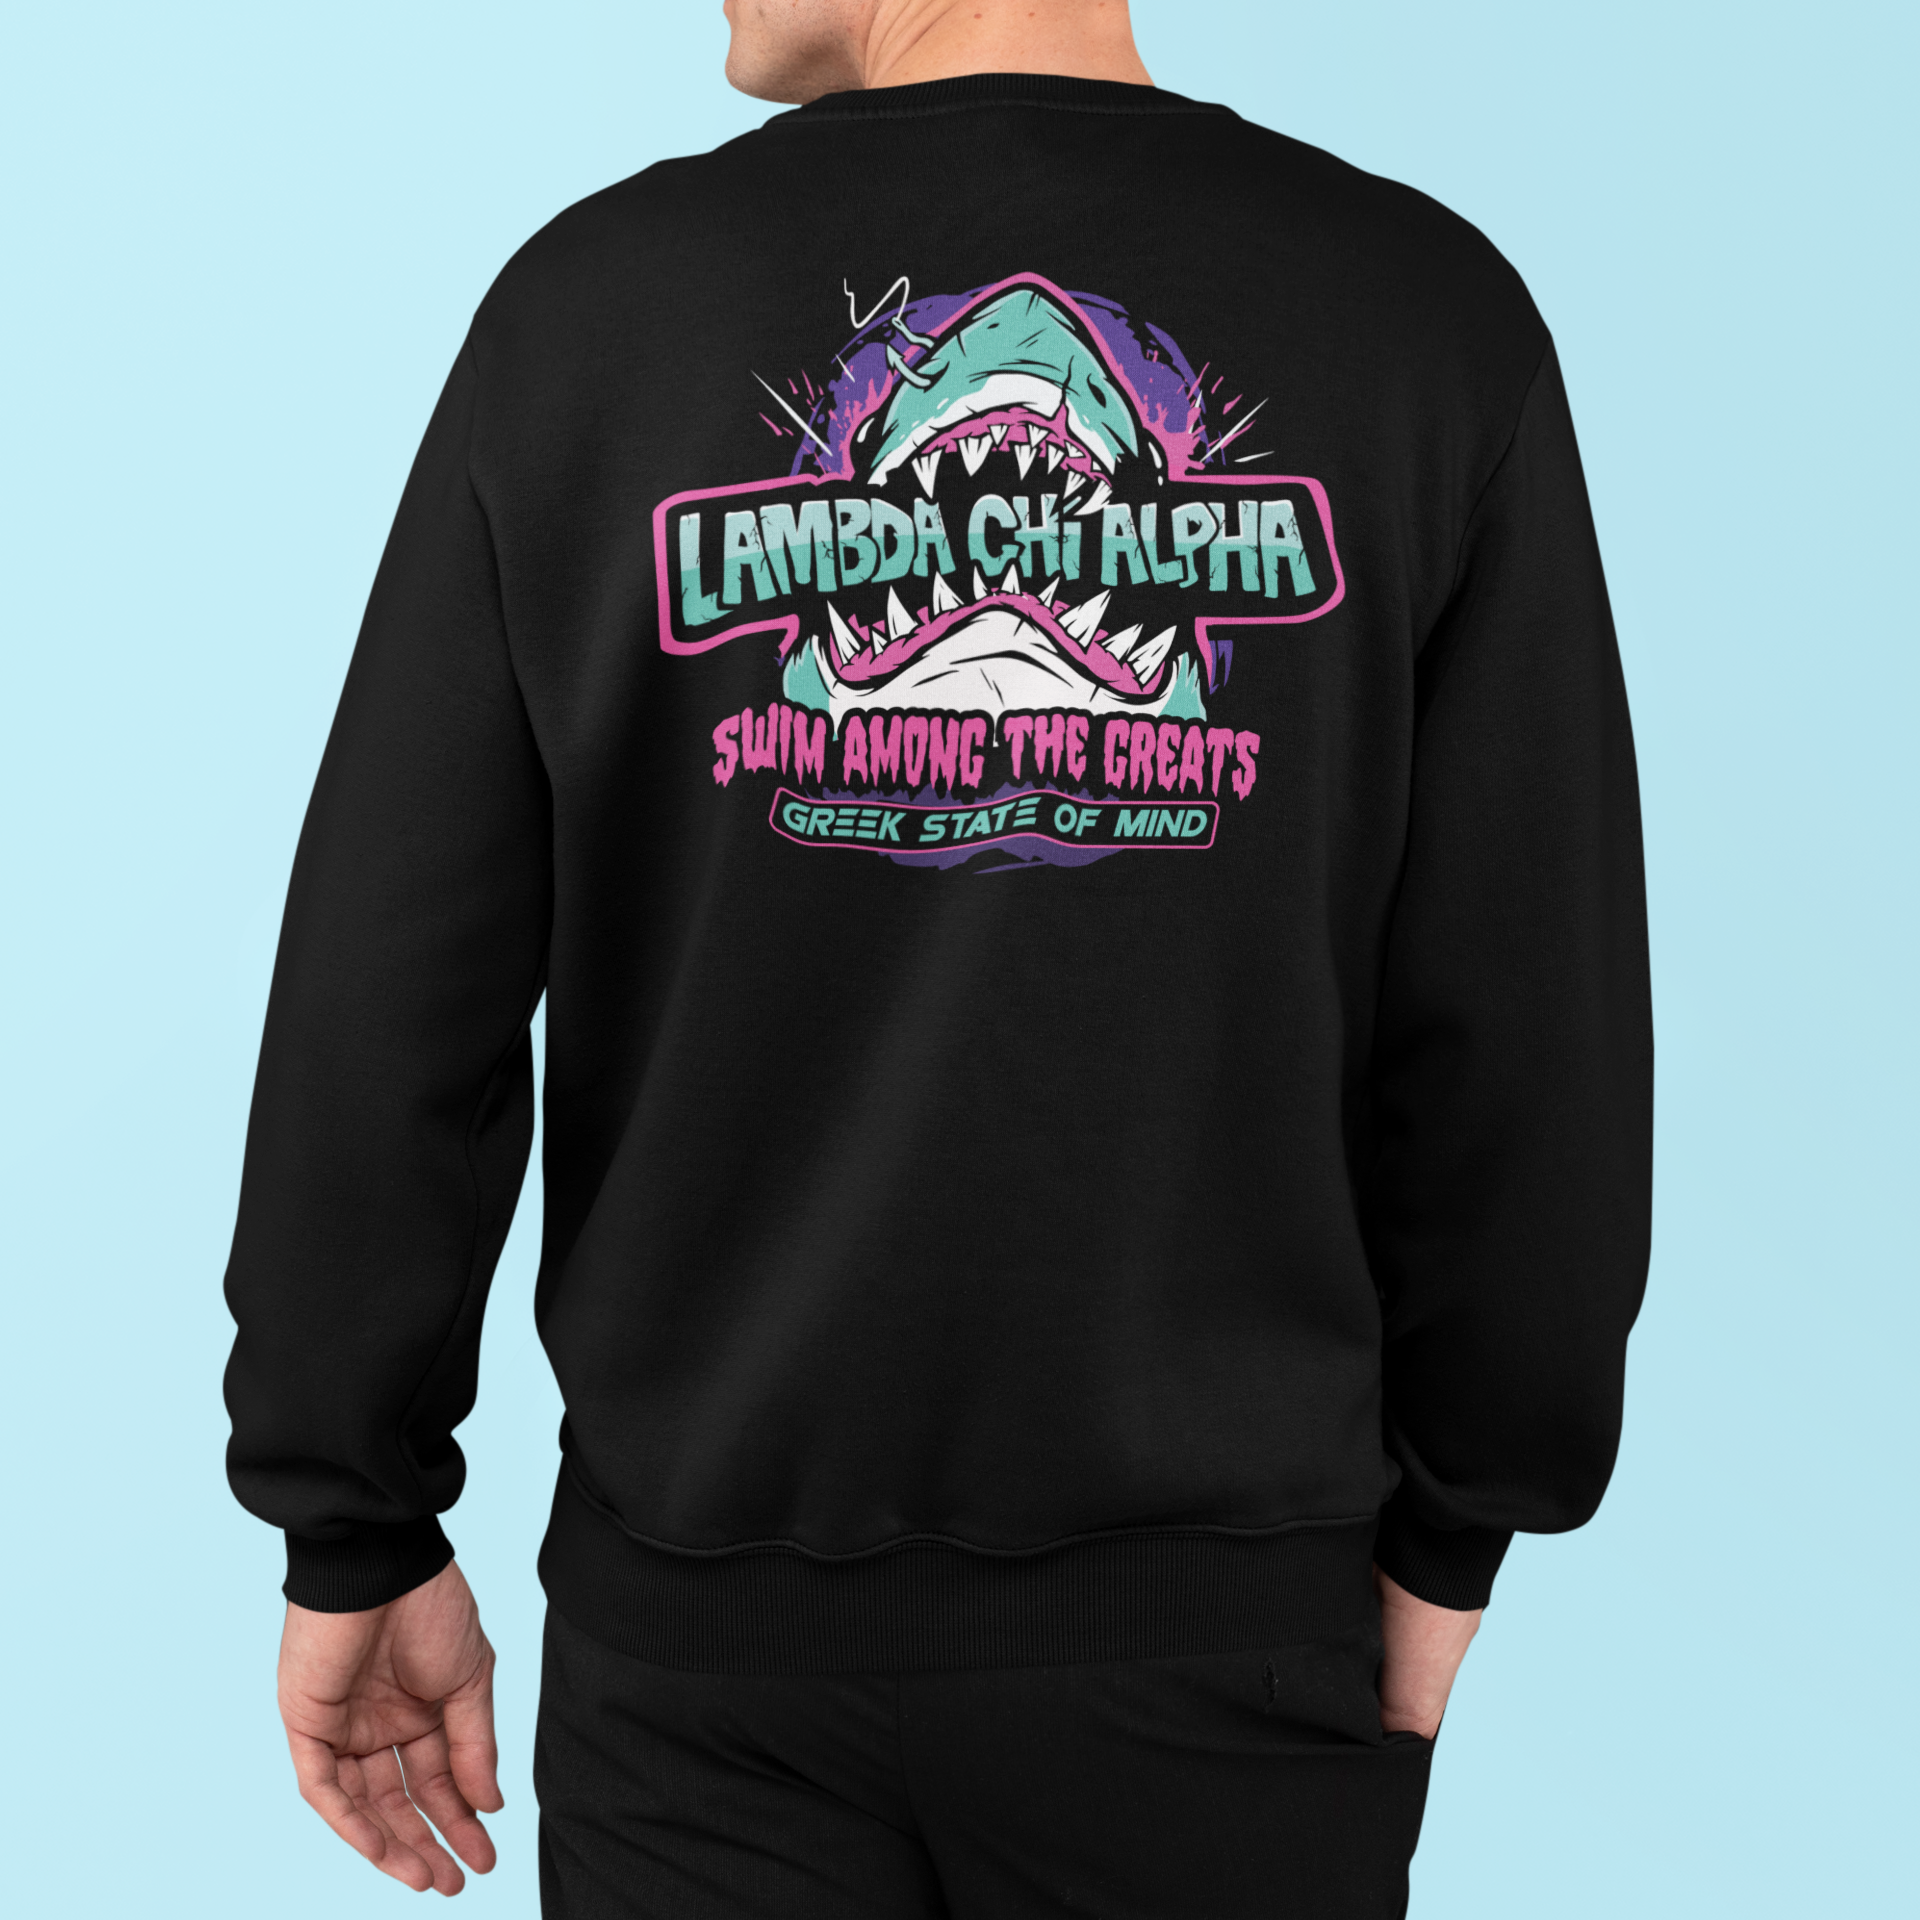 Black Lambda Chi Alpha Graphic Crewneck Sweatshirt | The Deep End | Lambda Chi Alpha Fraternity Shirt back model 